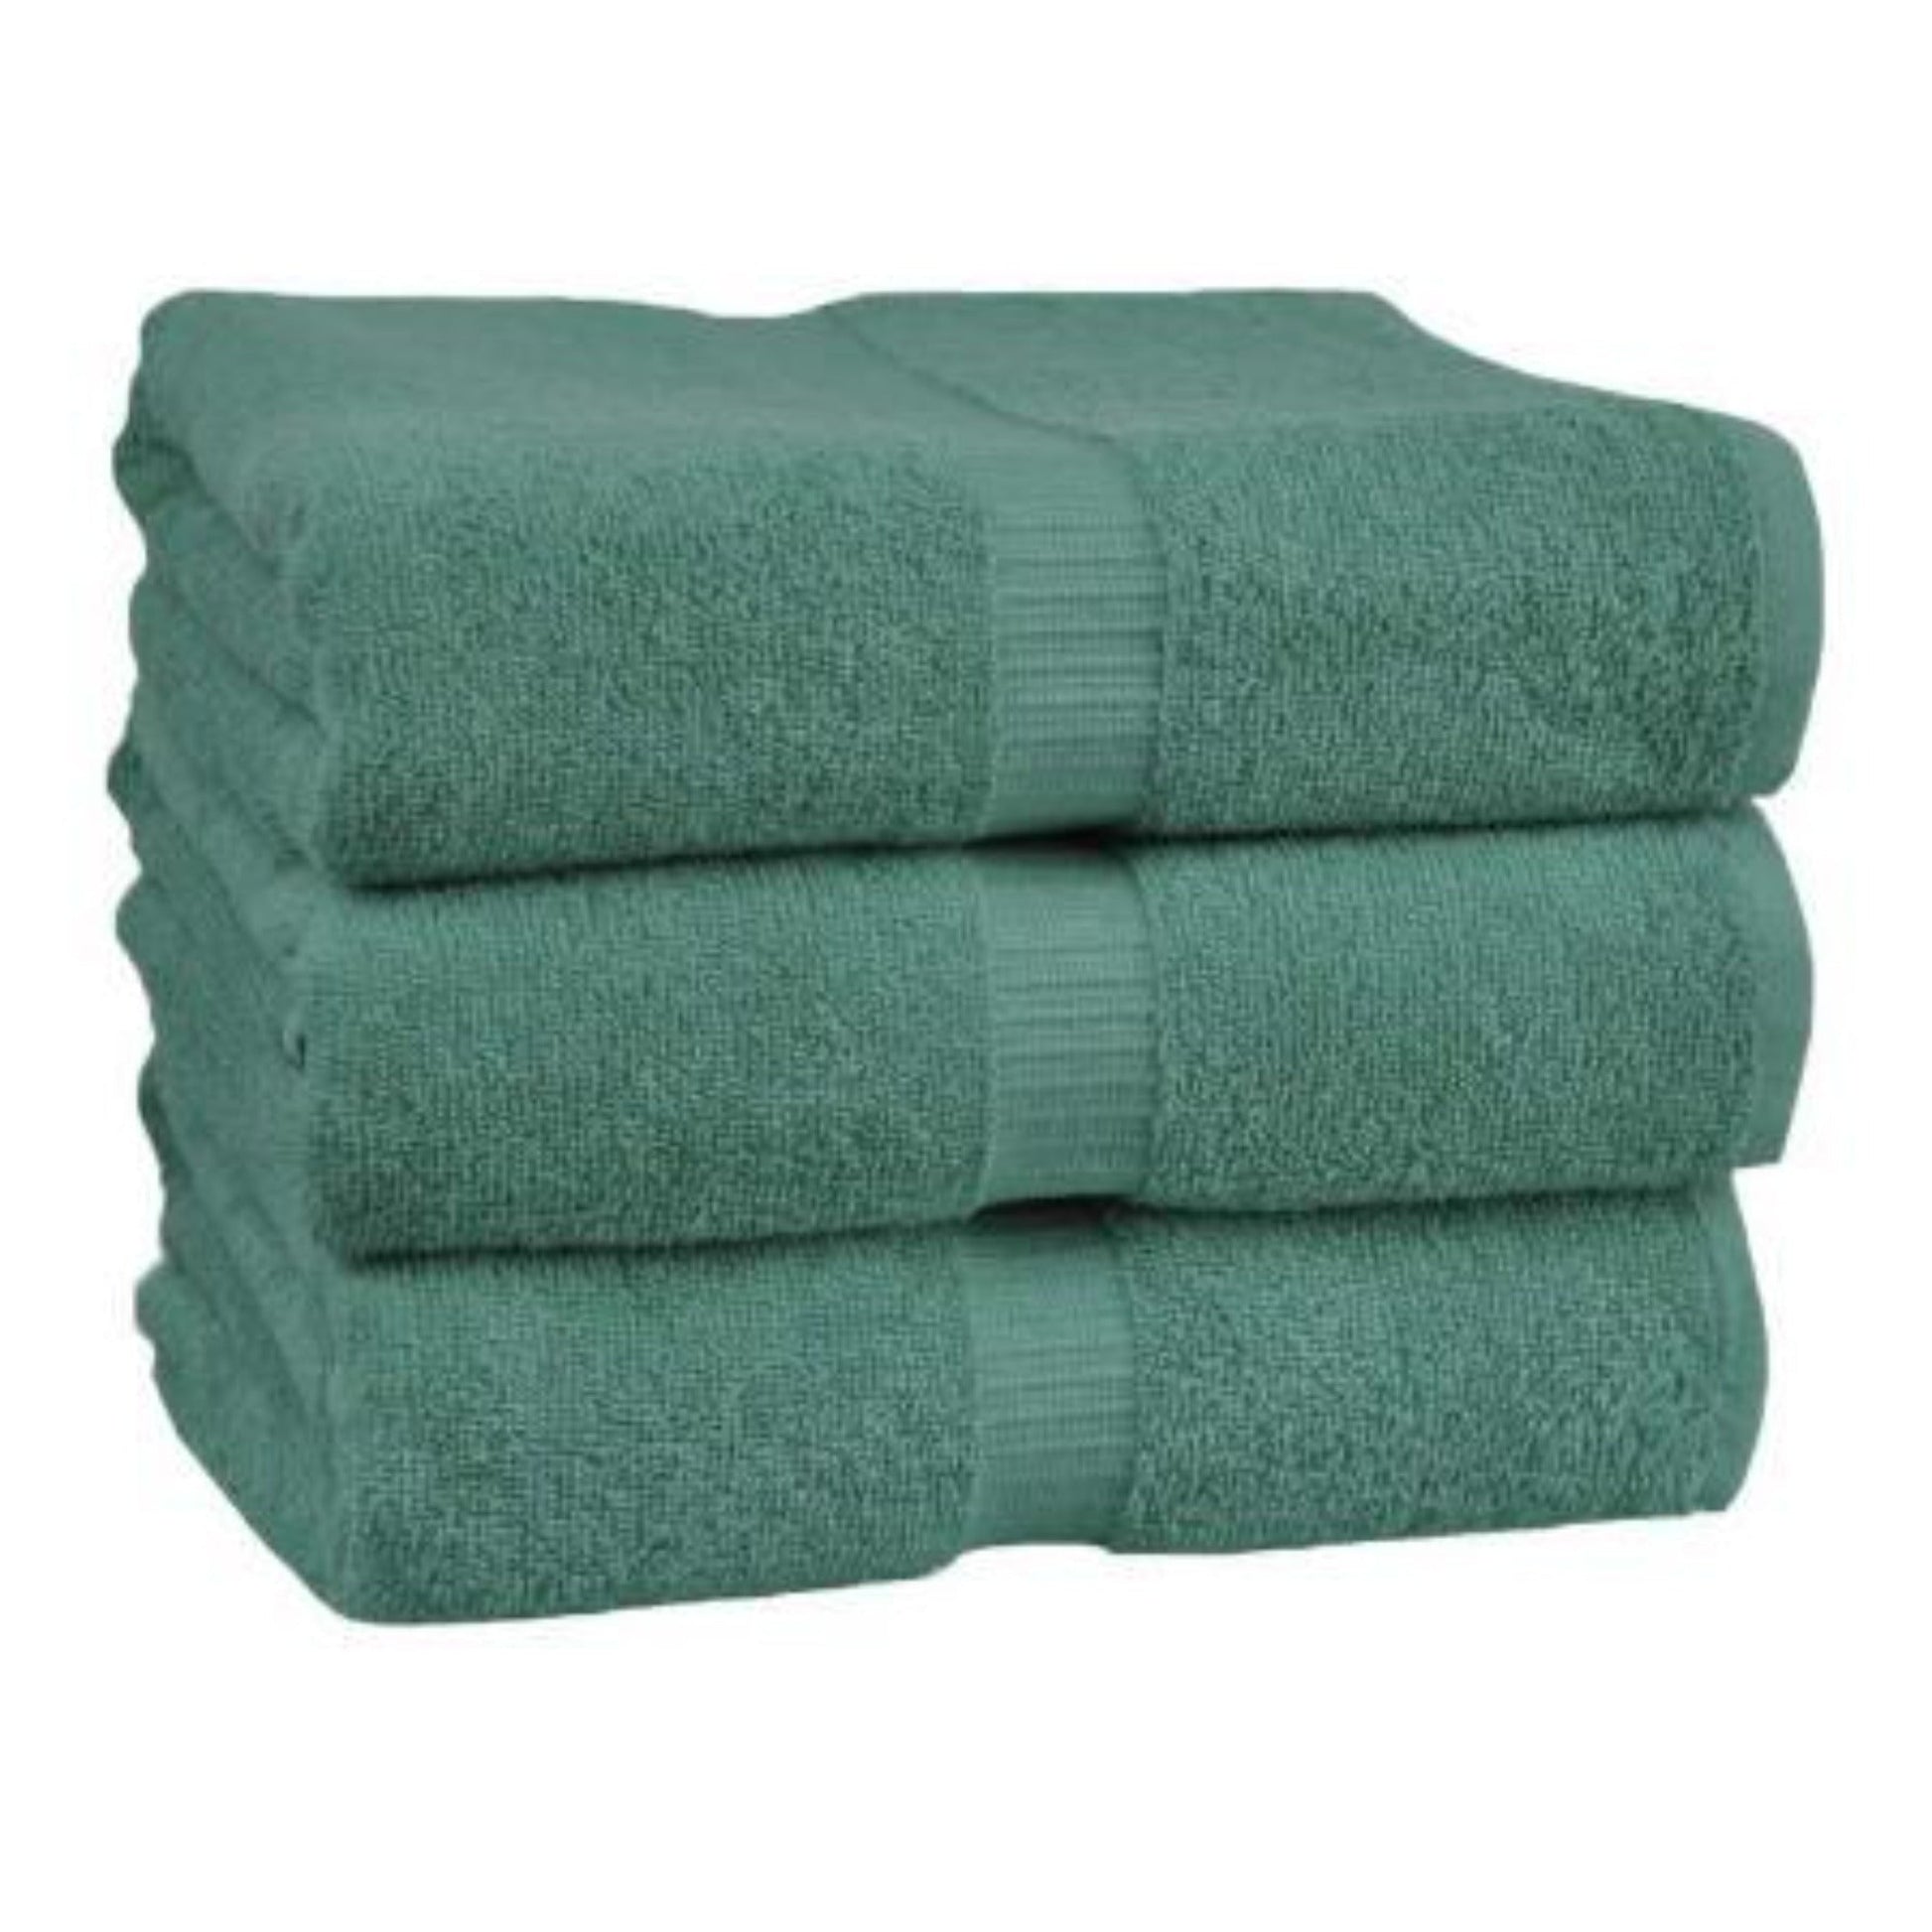 Premium Jade Swim Towel: Immerse in Luxury - Premium Jade Pool Towel (24x48'') - shop now at CHS